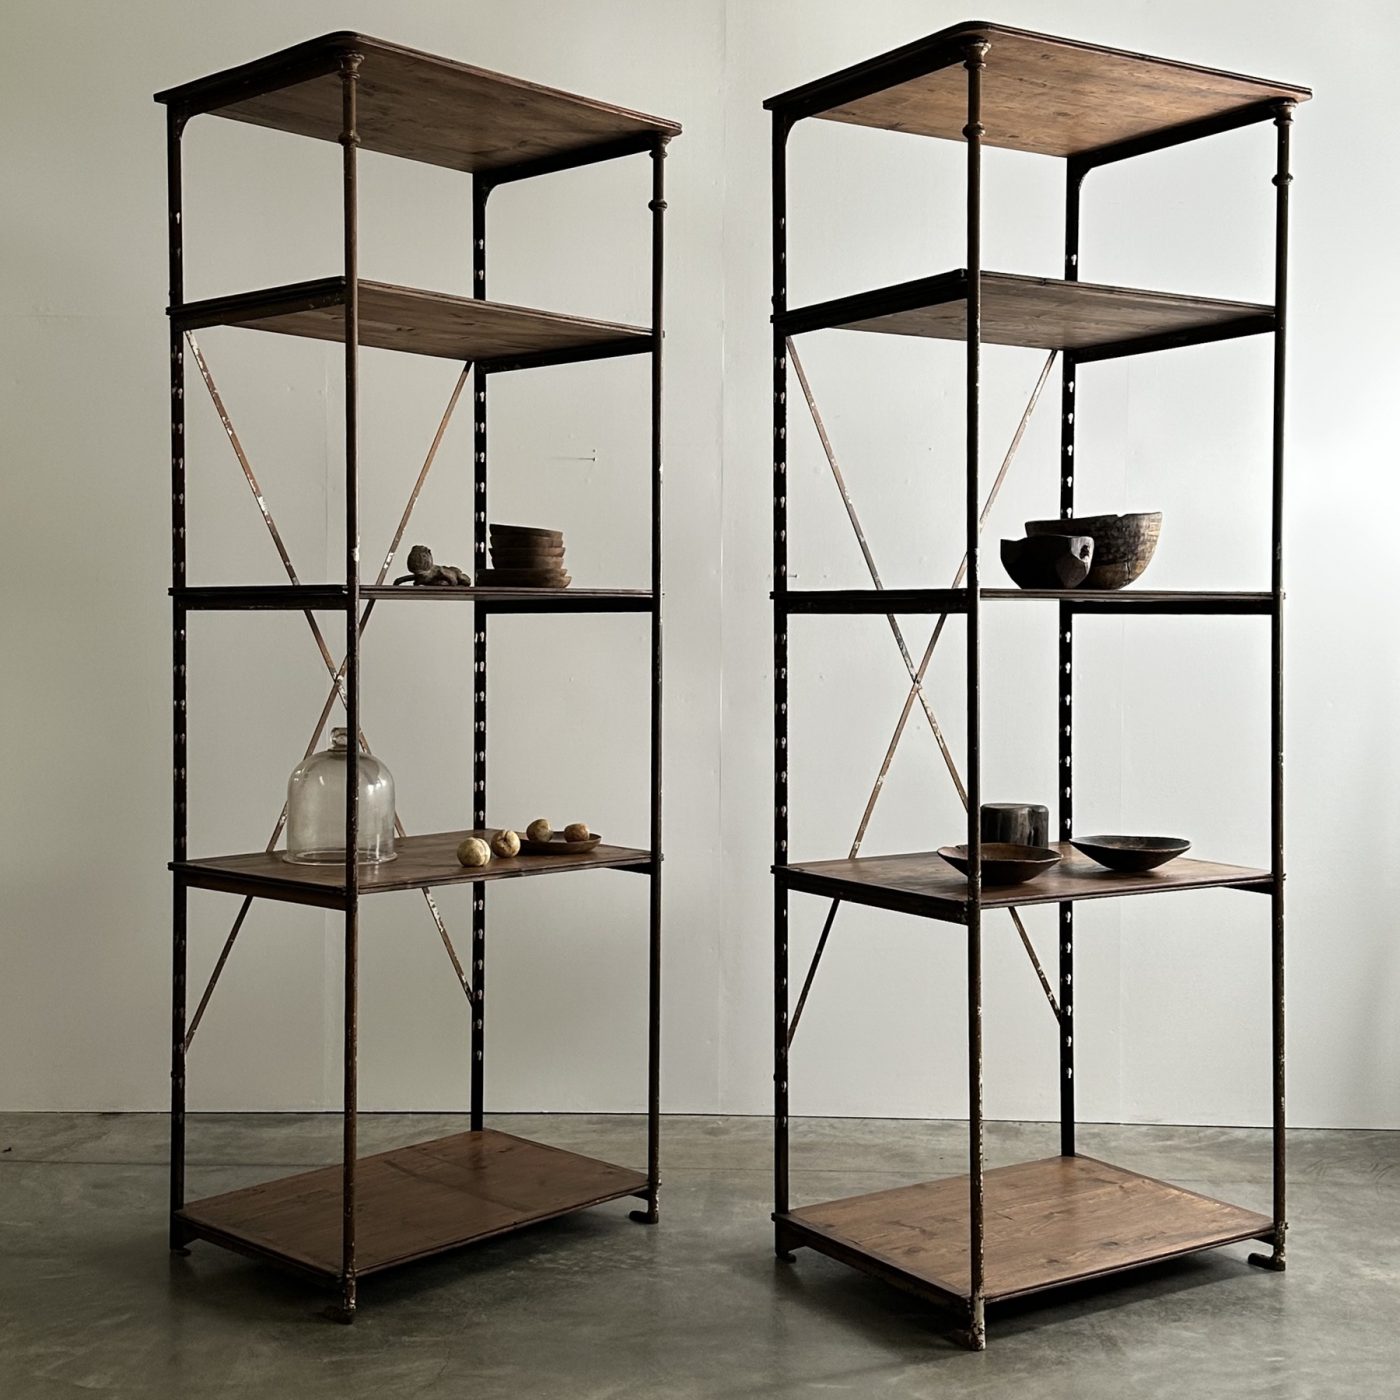 objet-vagabond-draper-shelves0003